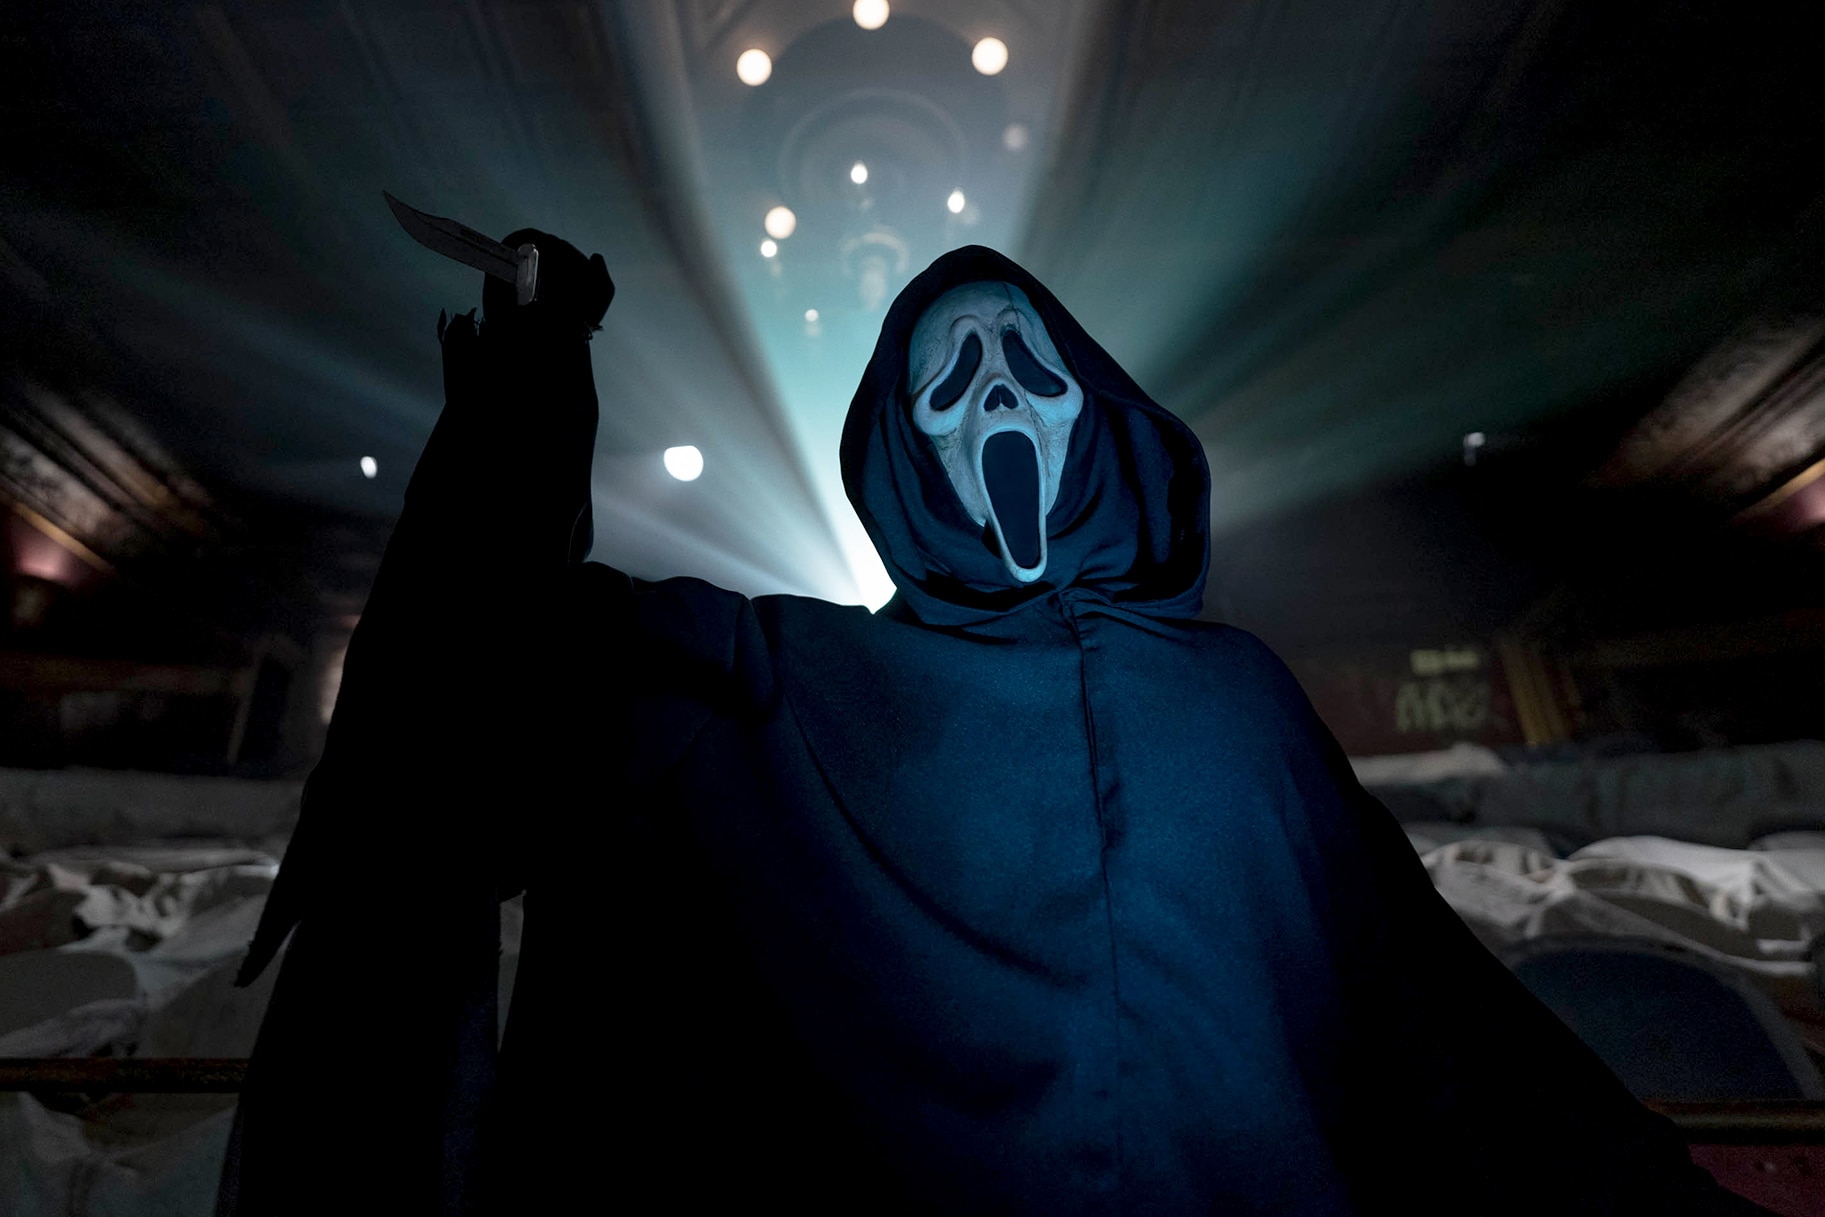 Ghostface holds a knife up in Scream Vi